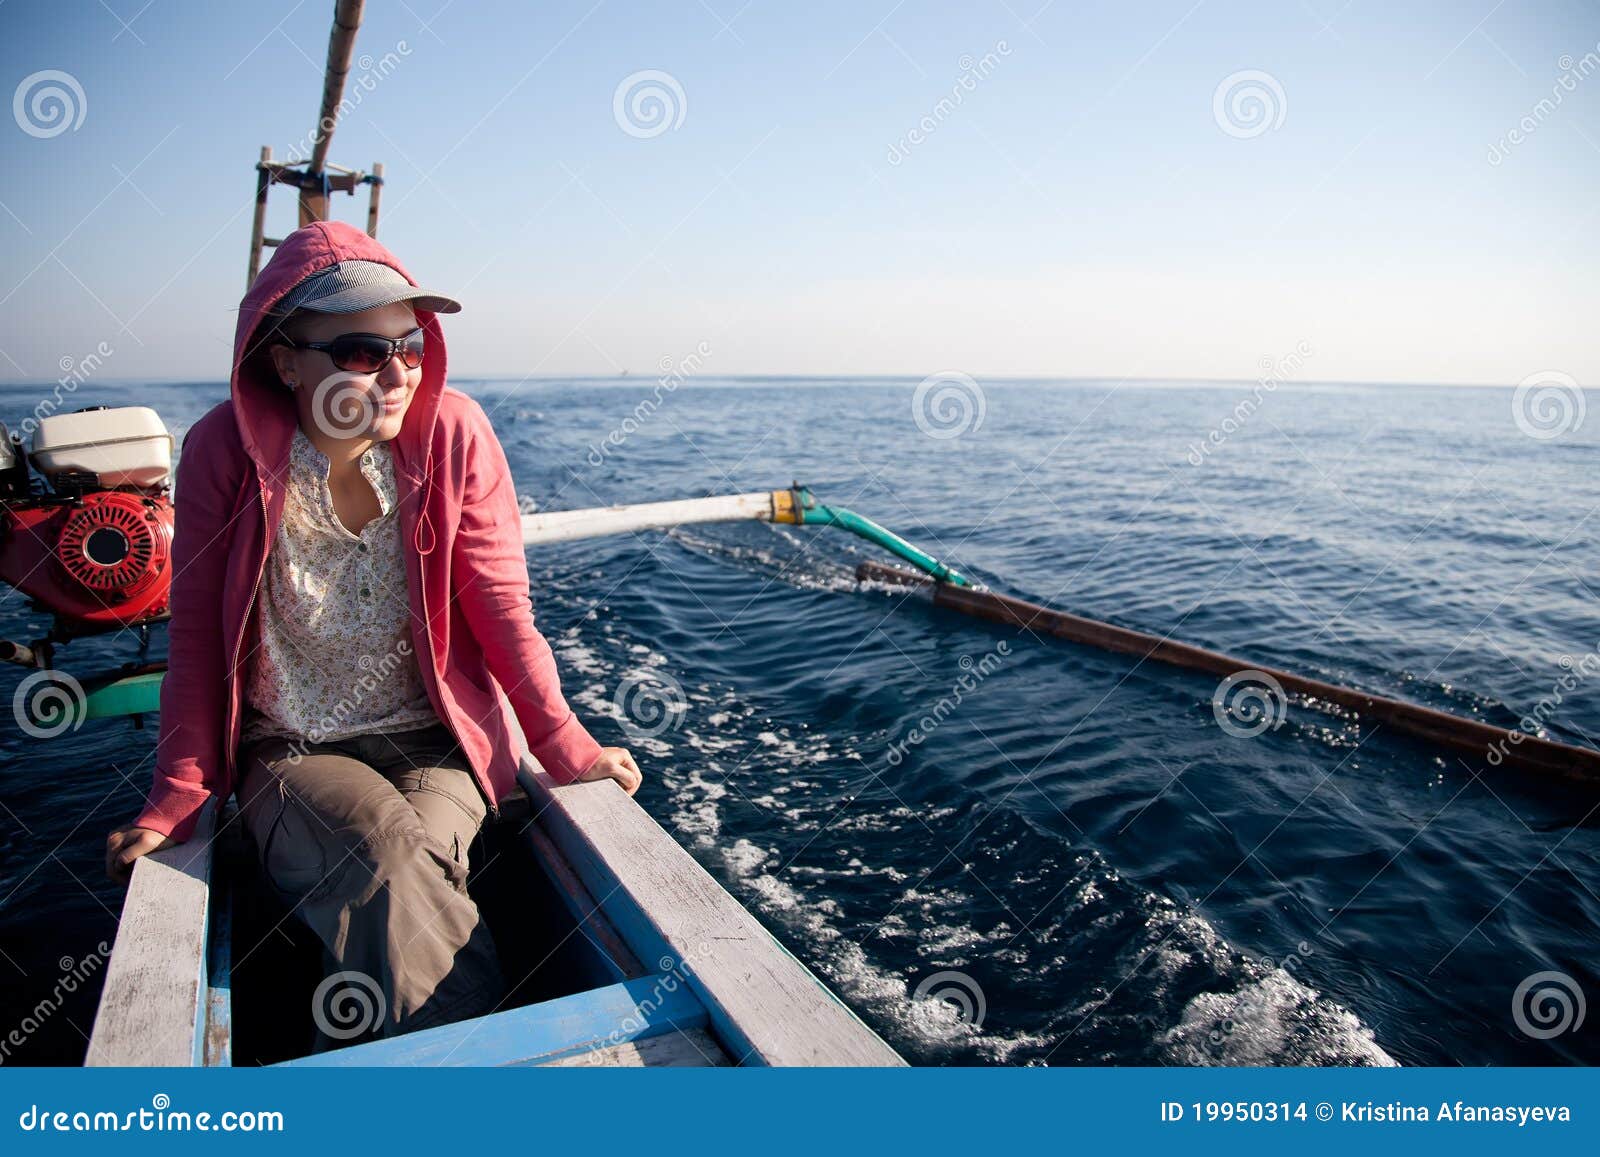 Woman Sailing Stock Images - Image: 19950314